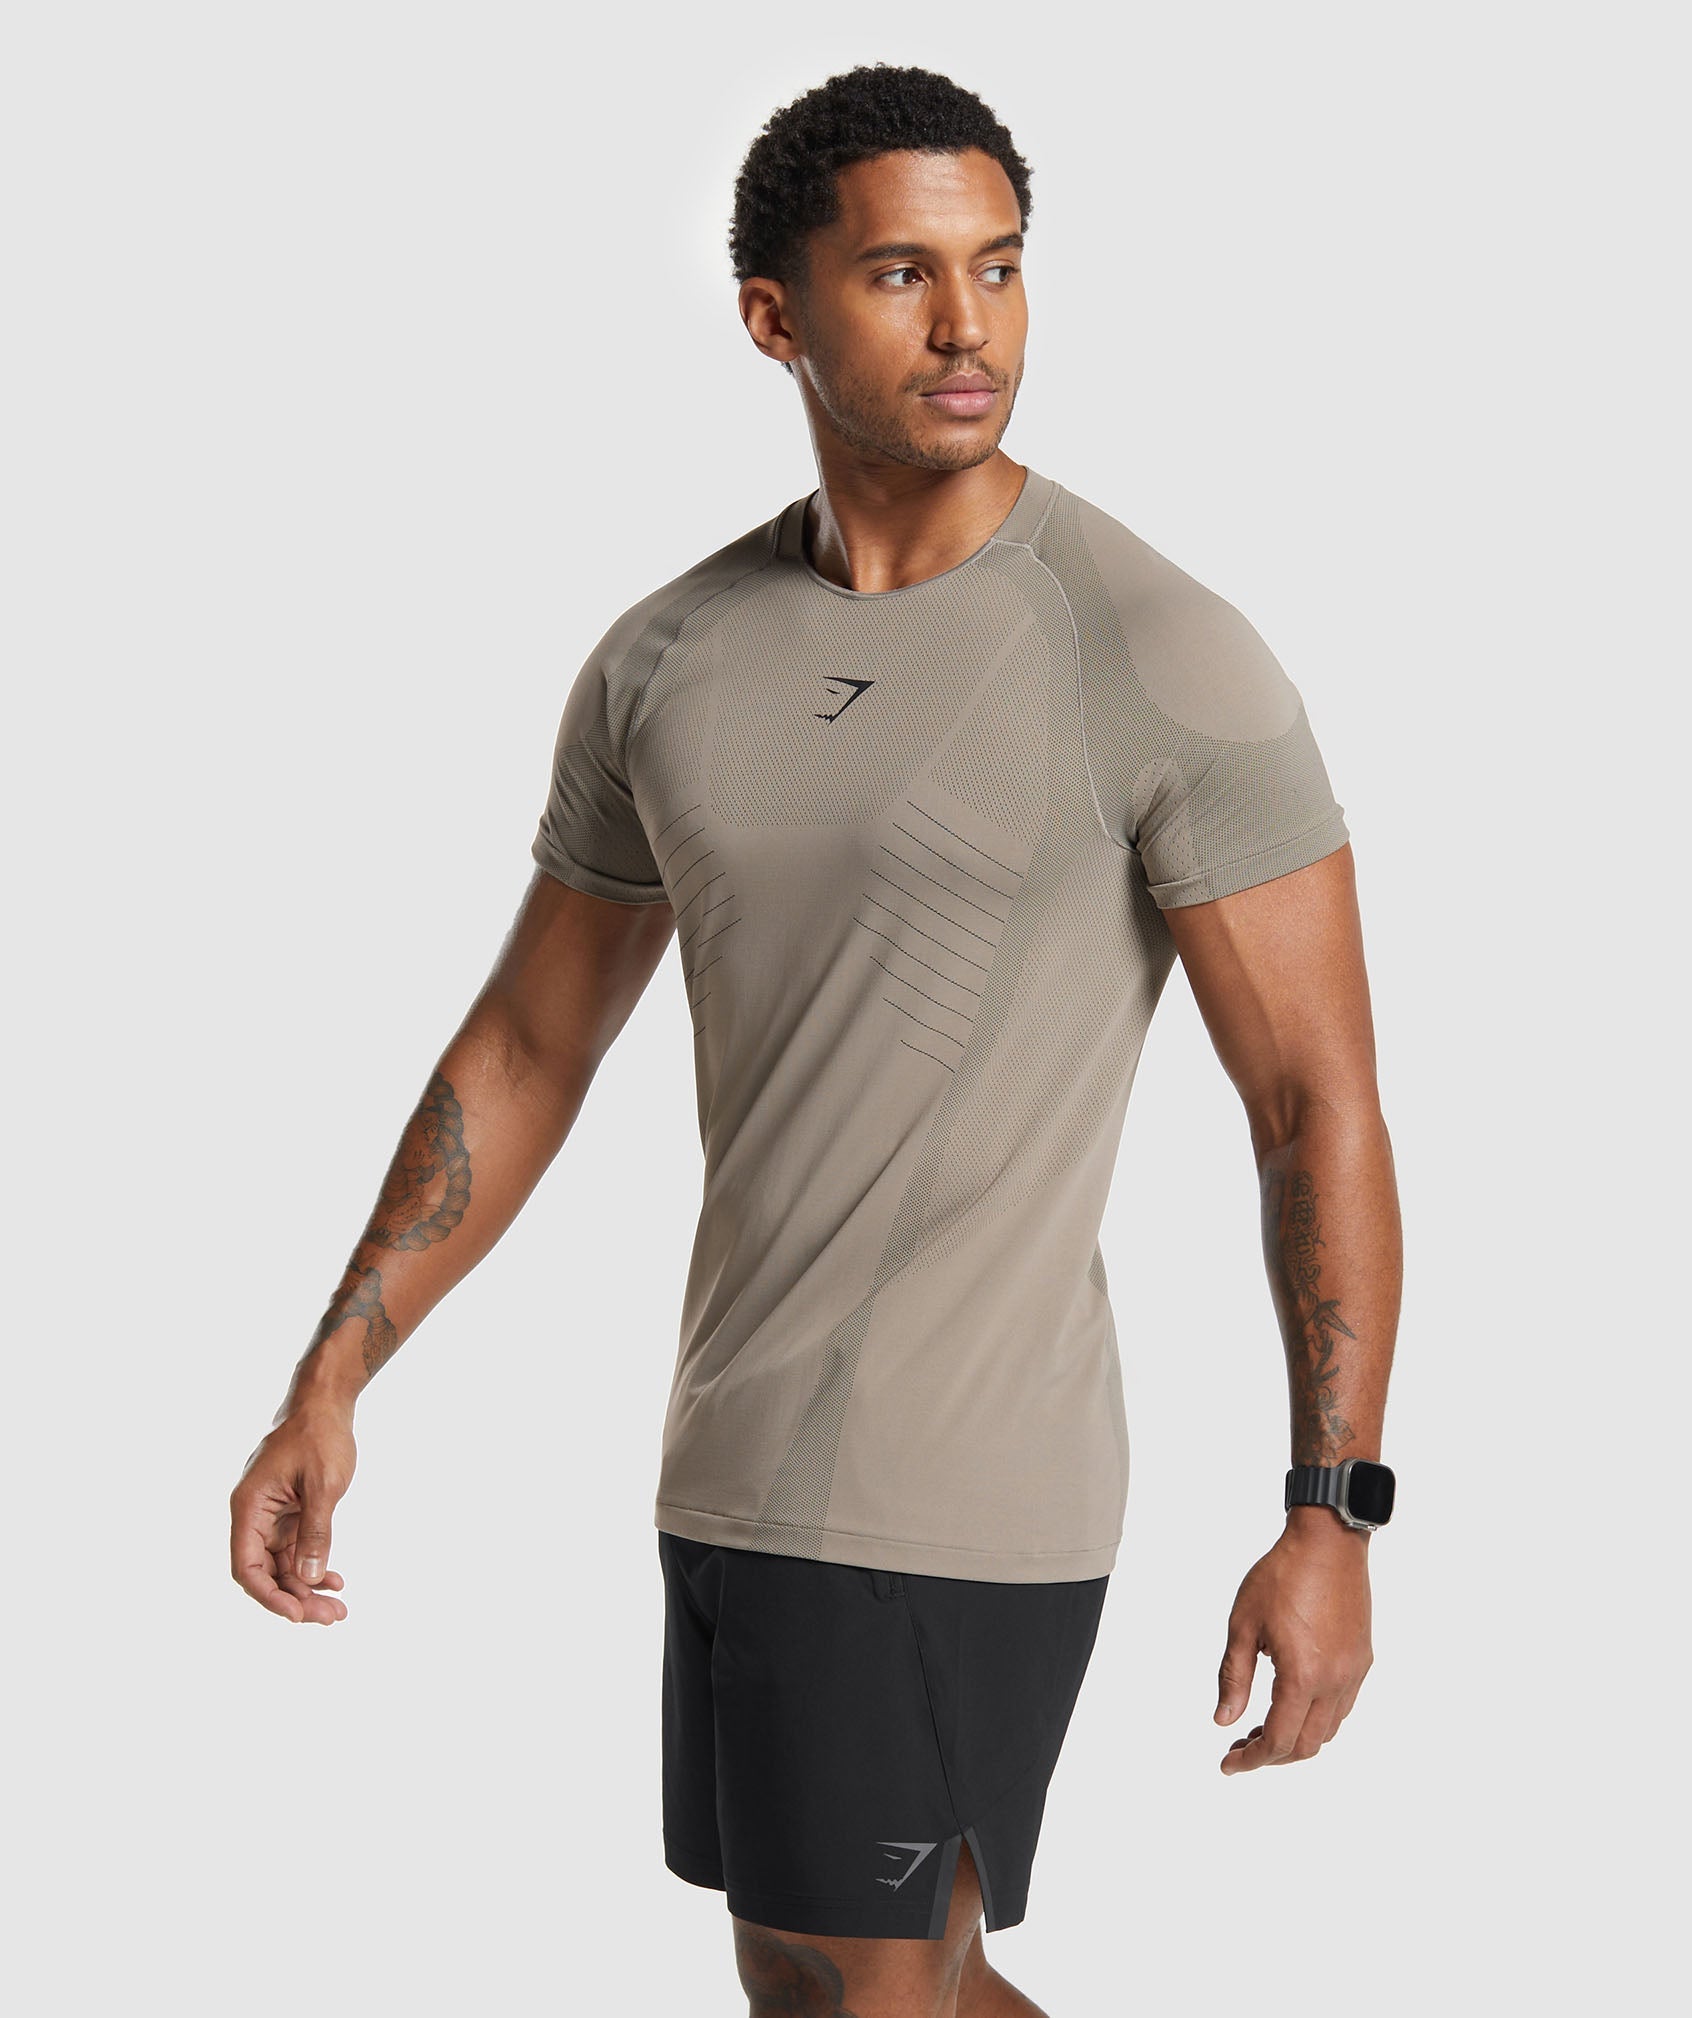 Apex Seamless T-Shirt in Linen Brown/Black - view 3